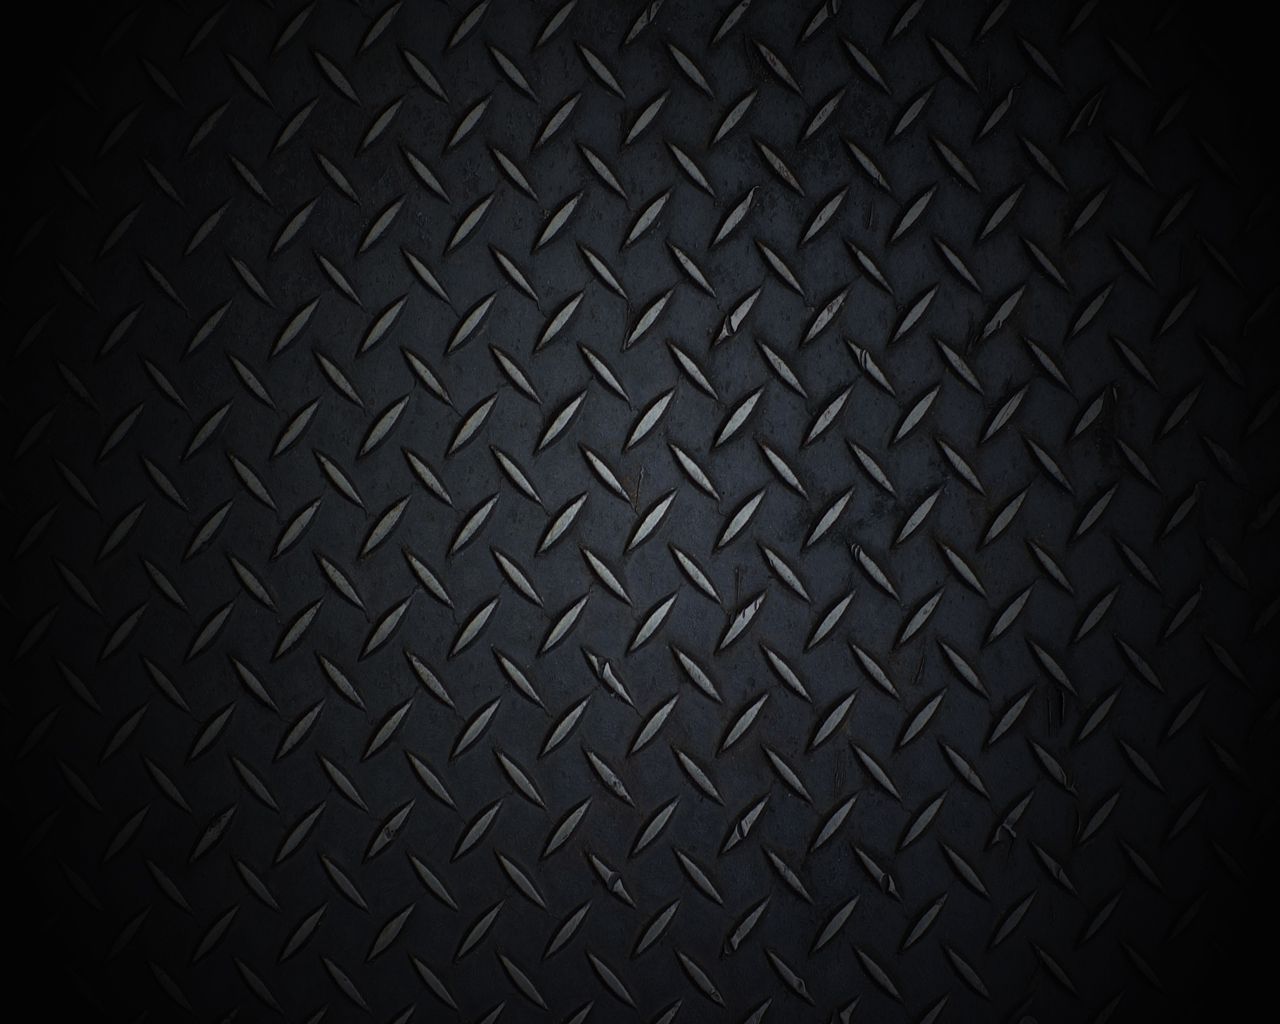 Black Diamond Plate Wallpaper